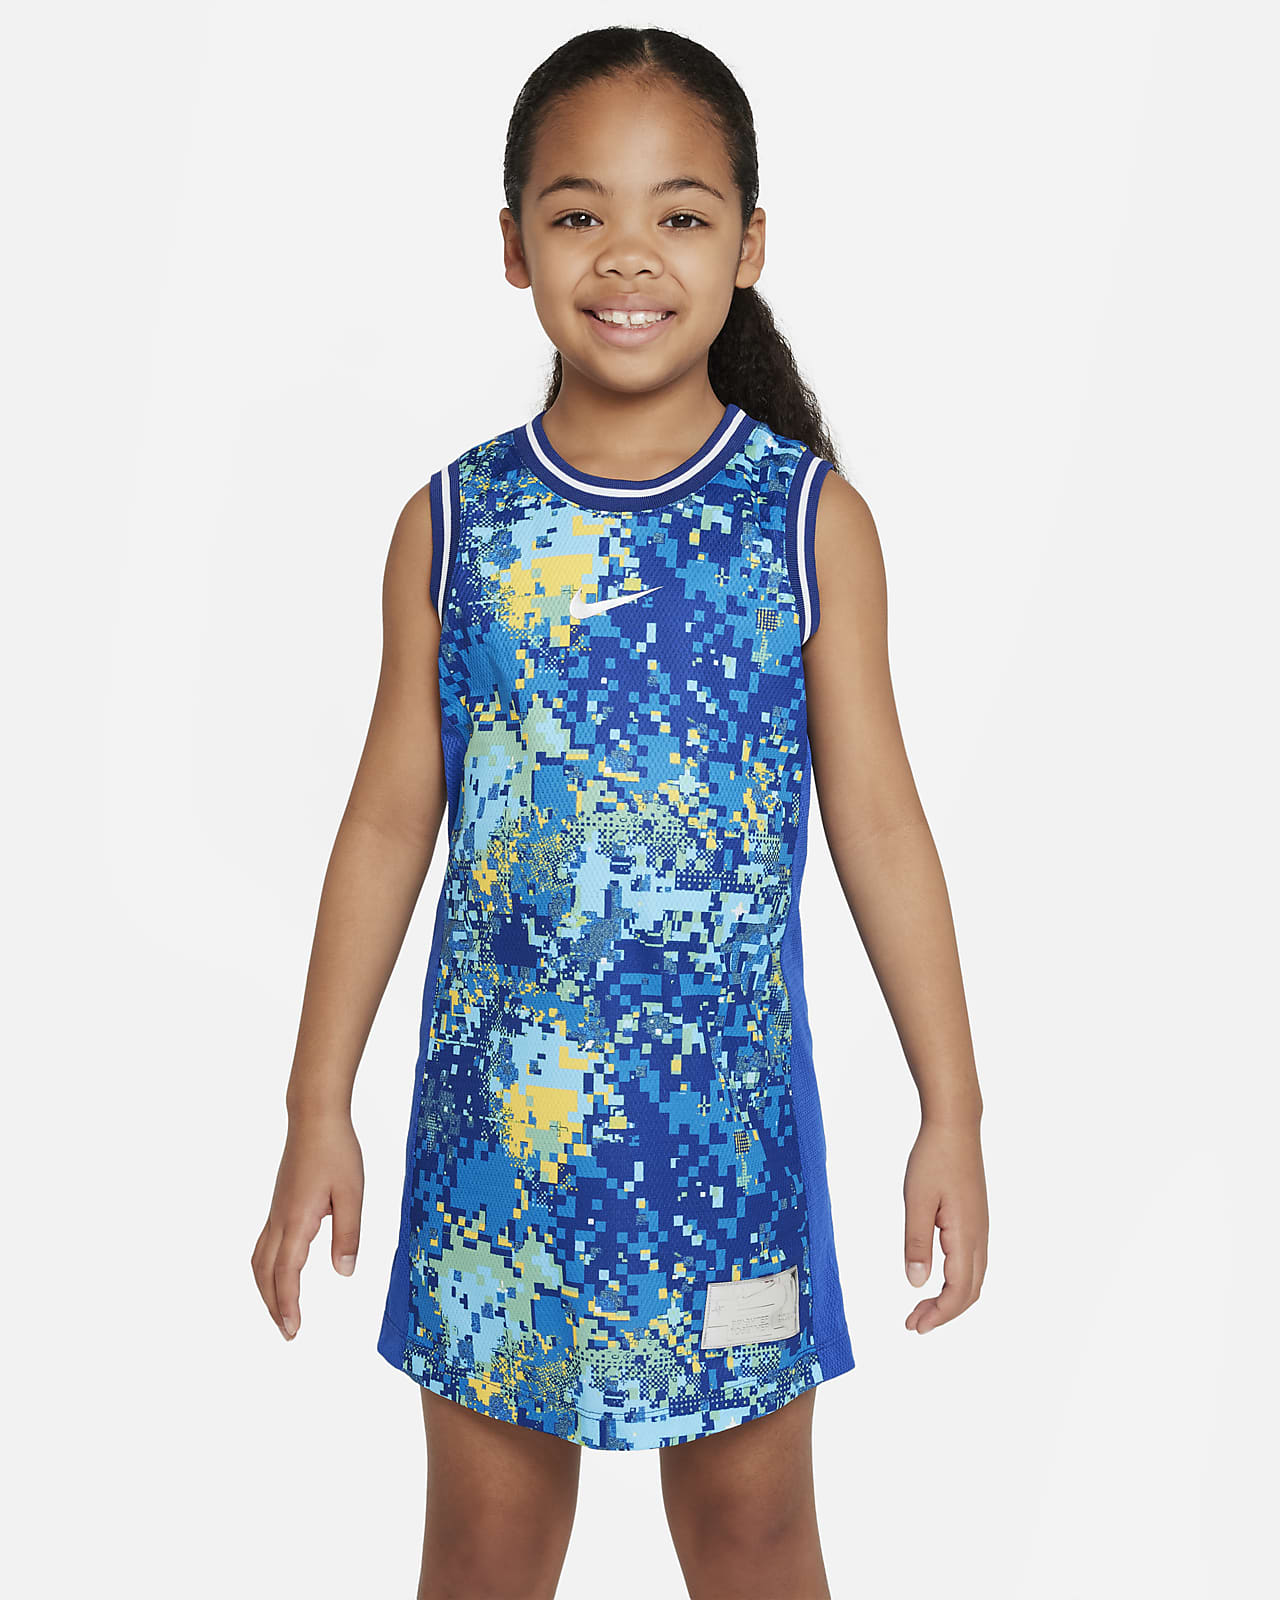 Nike All-Star Dress Little Kids' Dress